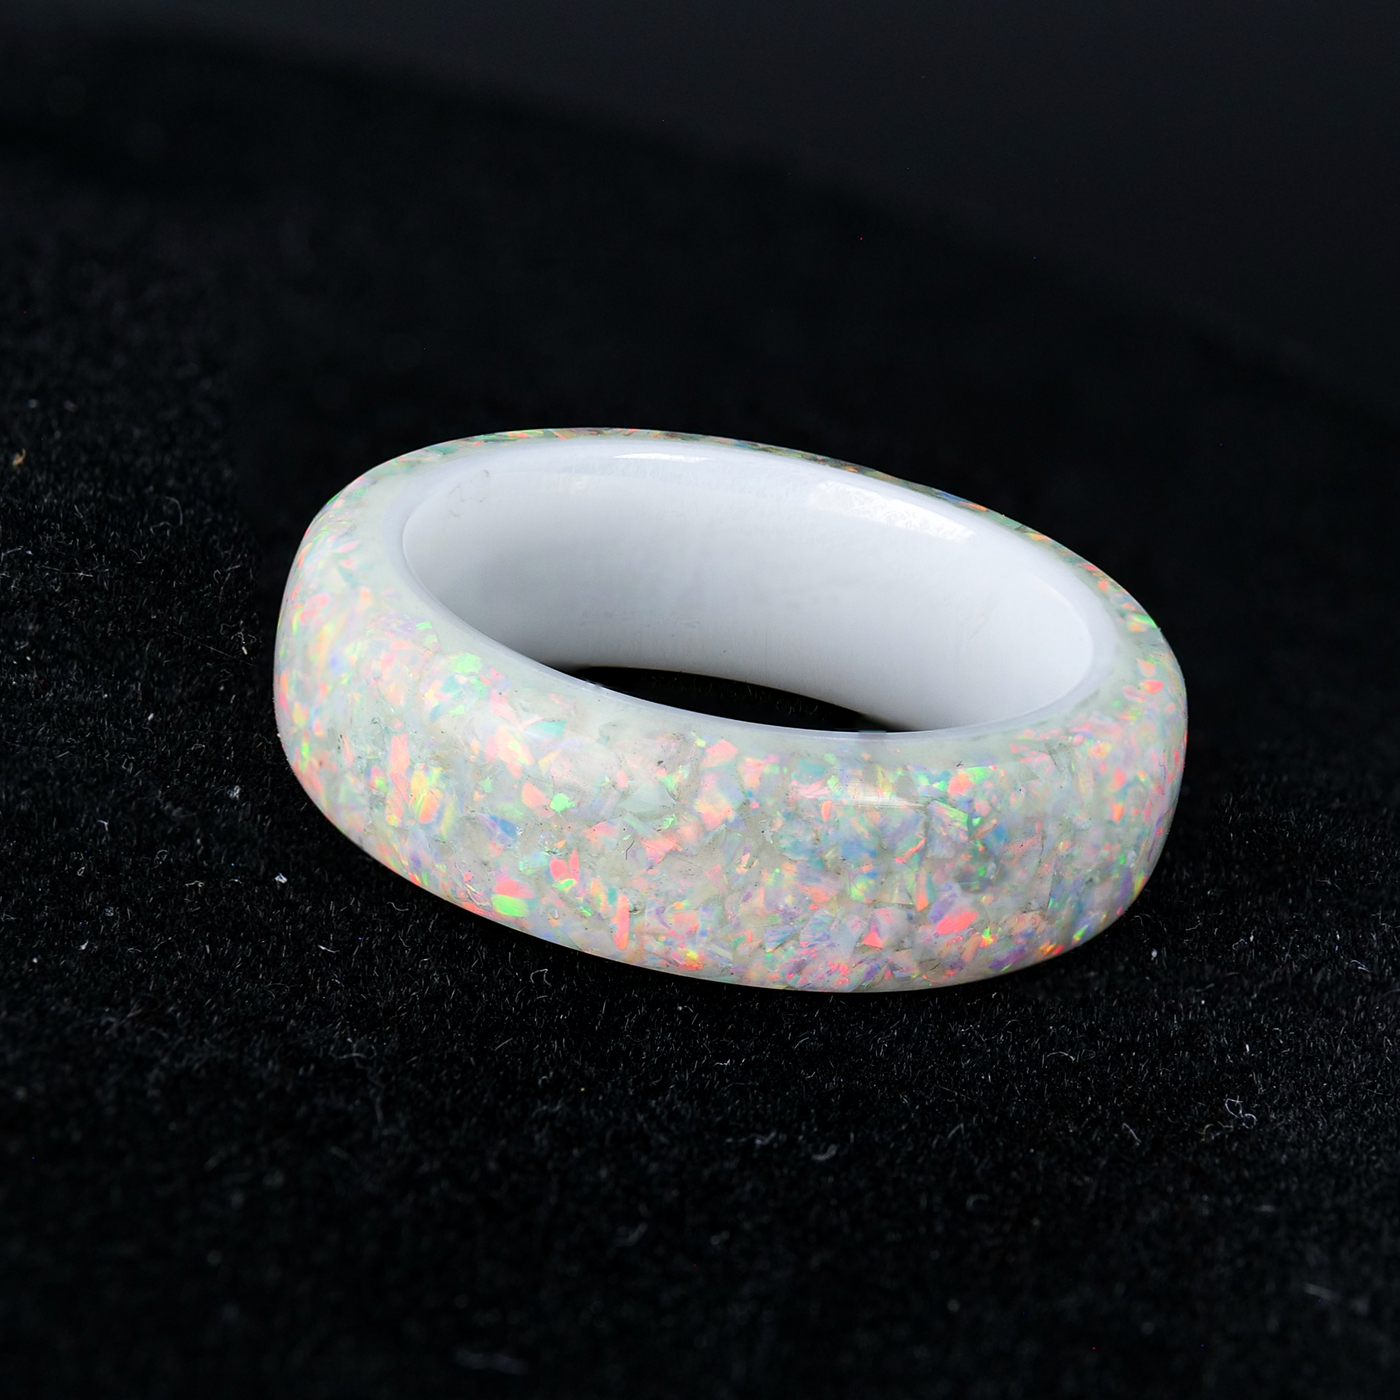 Pearl White Opal Dust Glowstone Ring - Patrick Adair Designs